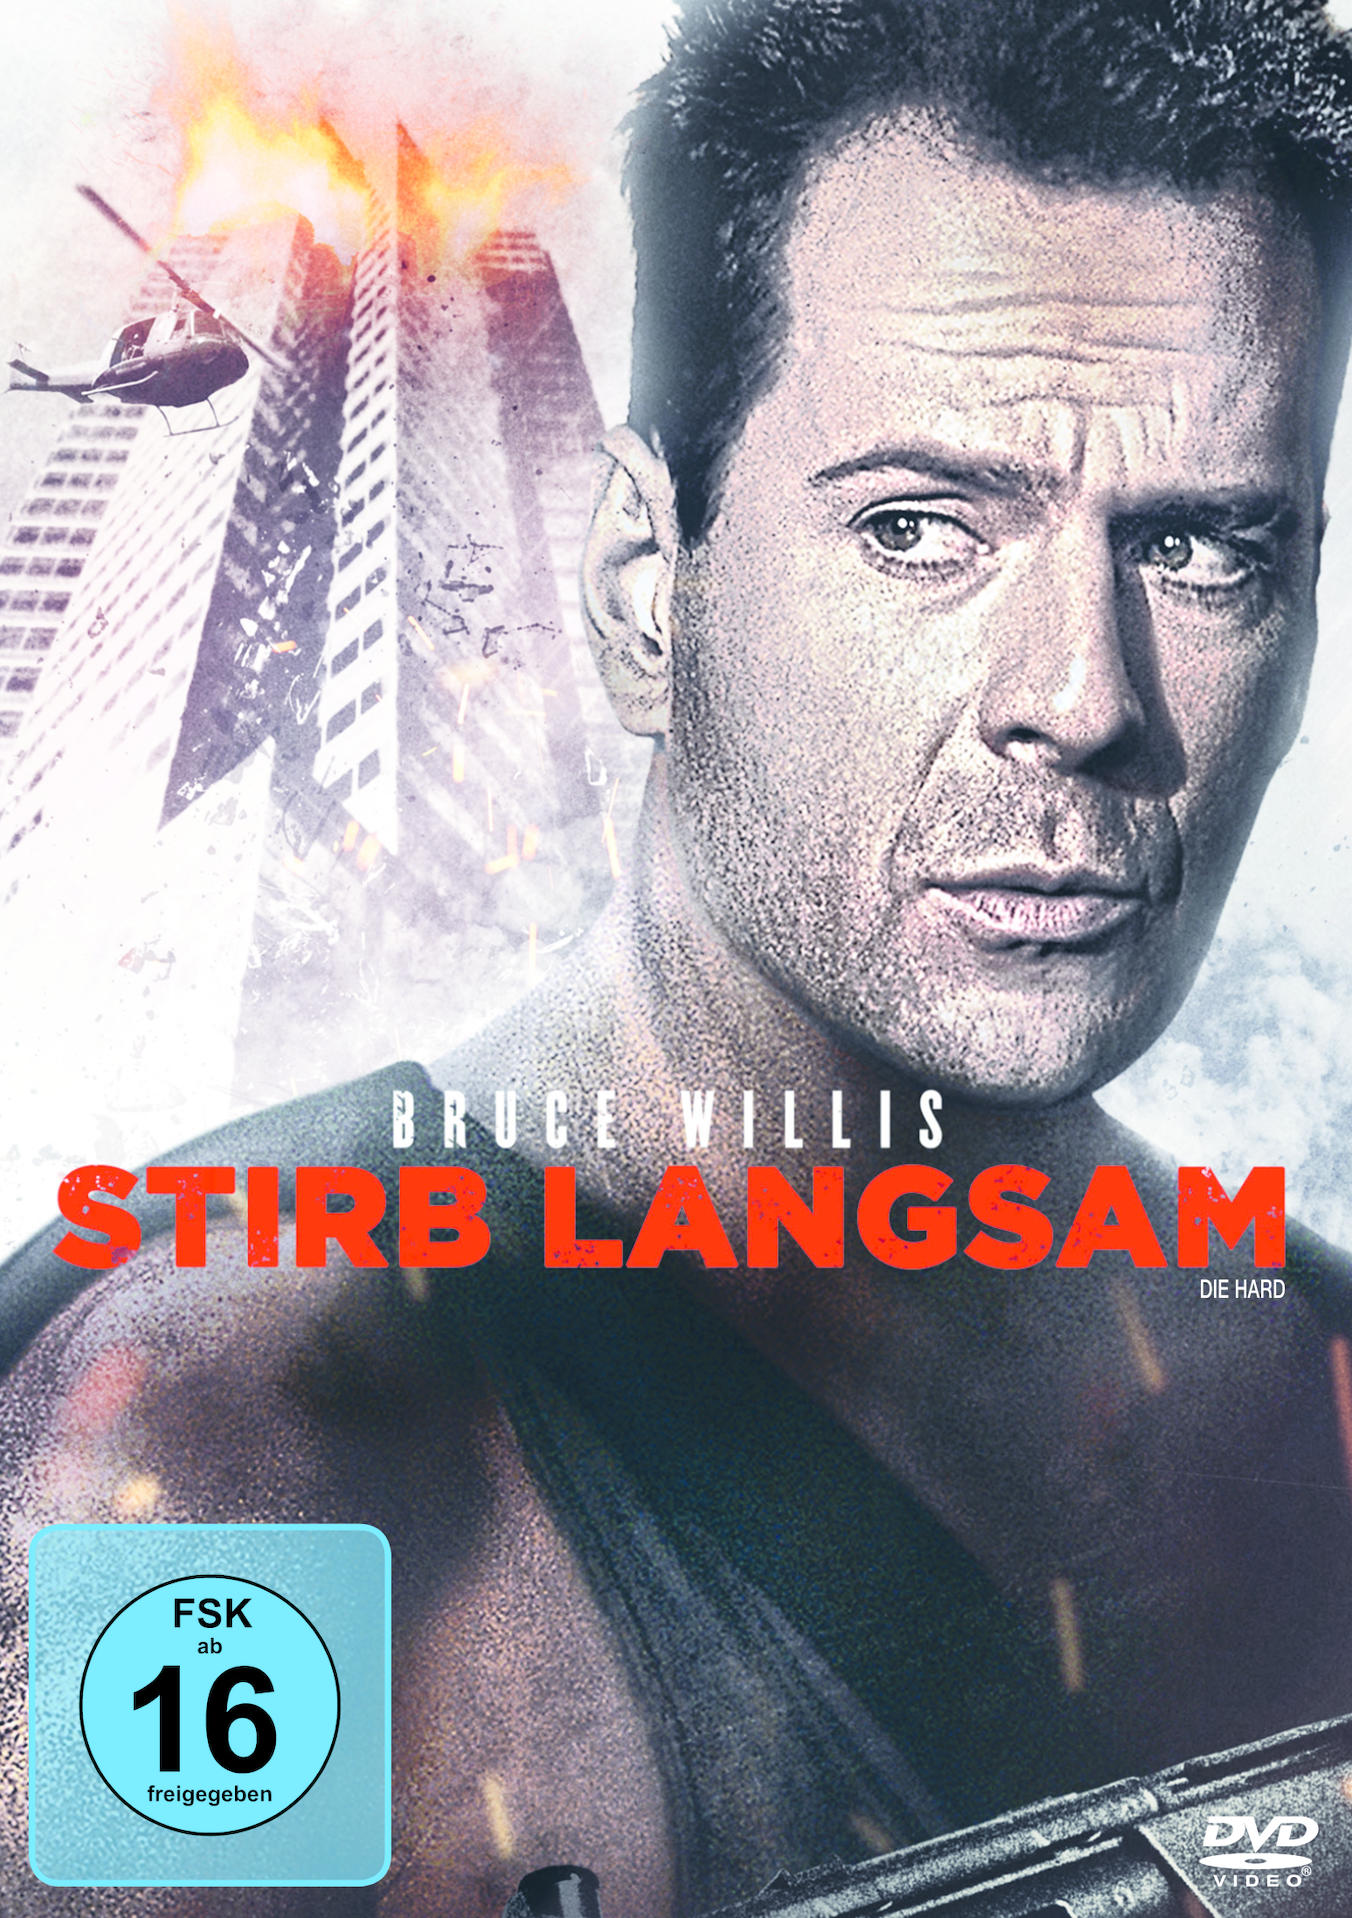 Edition Stirb - langsam DVD Special